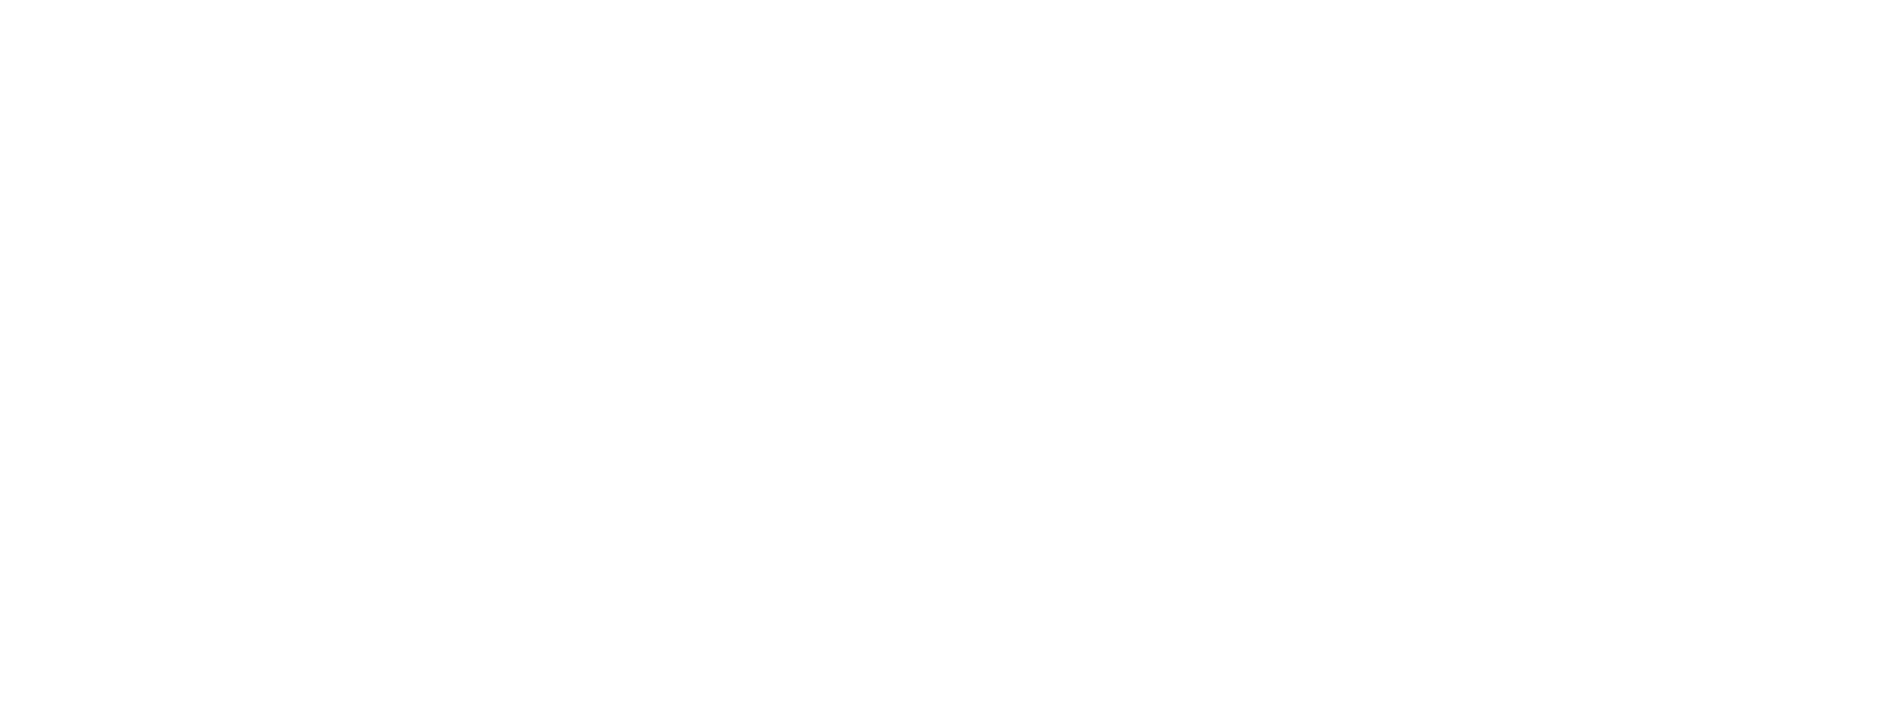 Cobseo logo